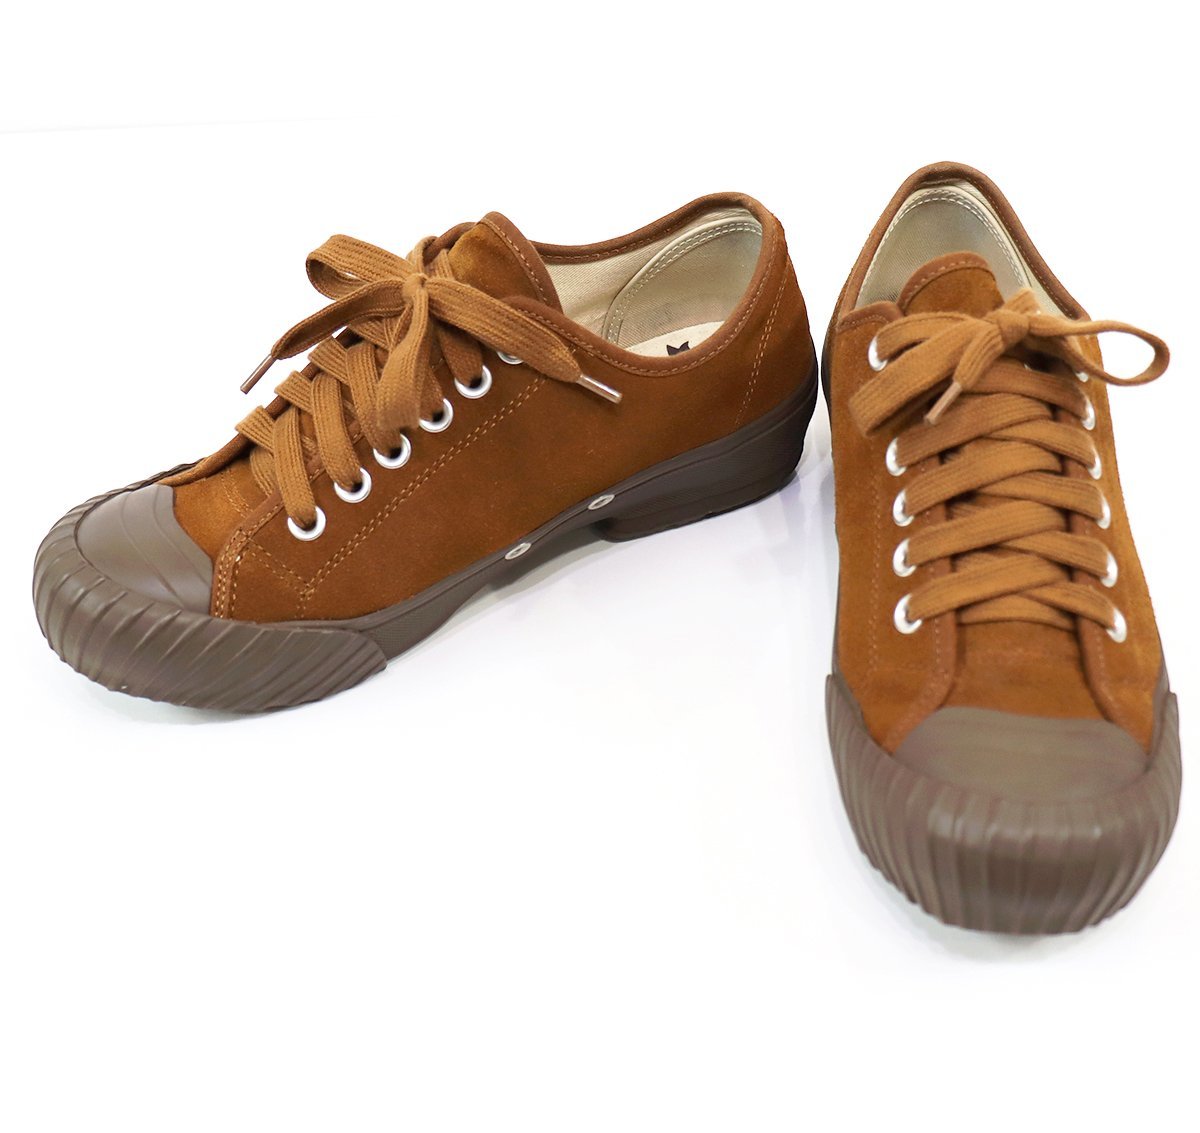 cushman (クッシュマン) Lot 29242 WW2 Low Cut Suede Sneaker / ローカット スエードスニーカー 美品 ブラウン size 8 (26cm)の画像3